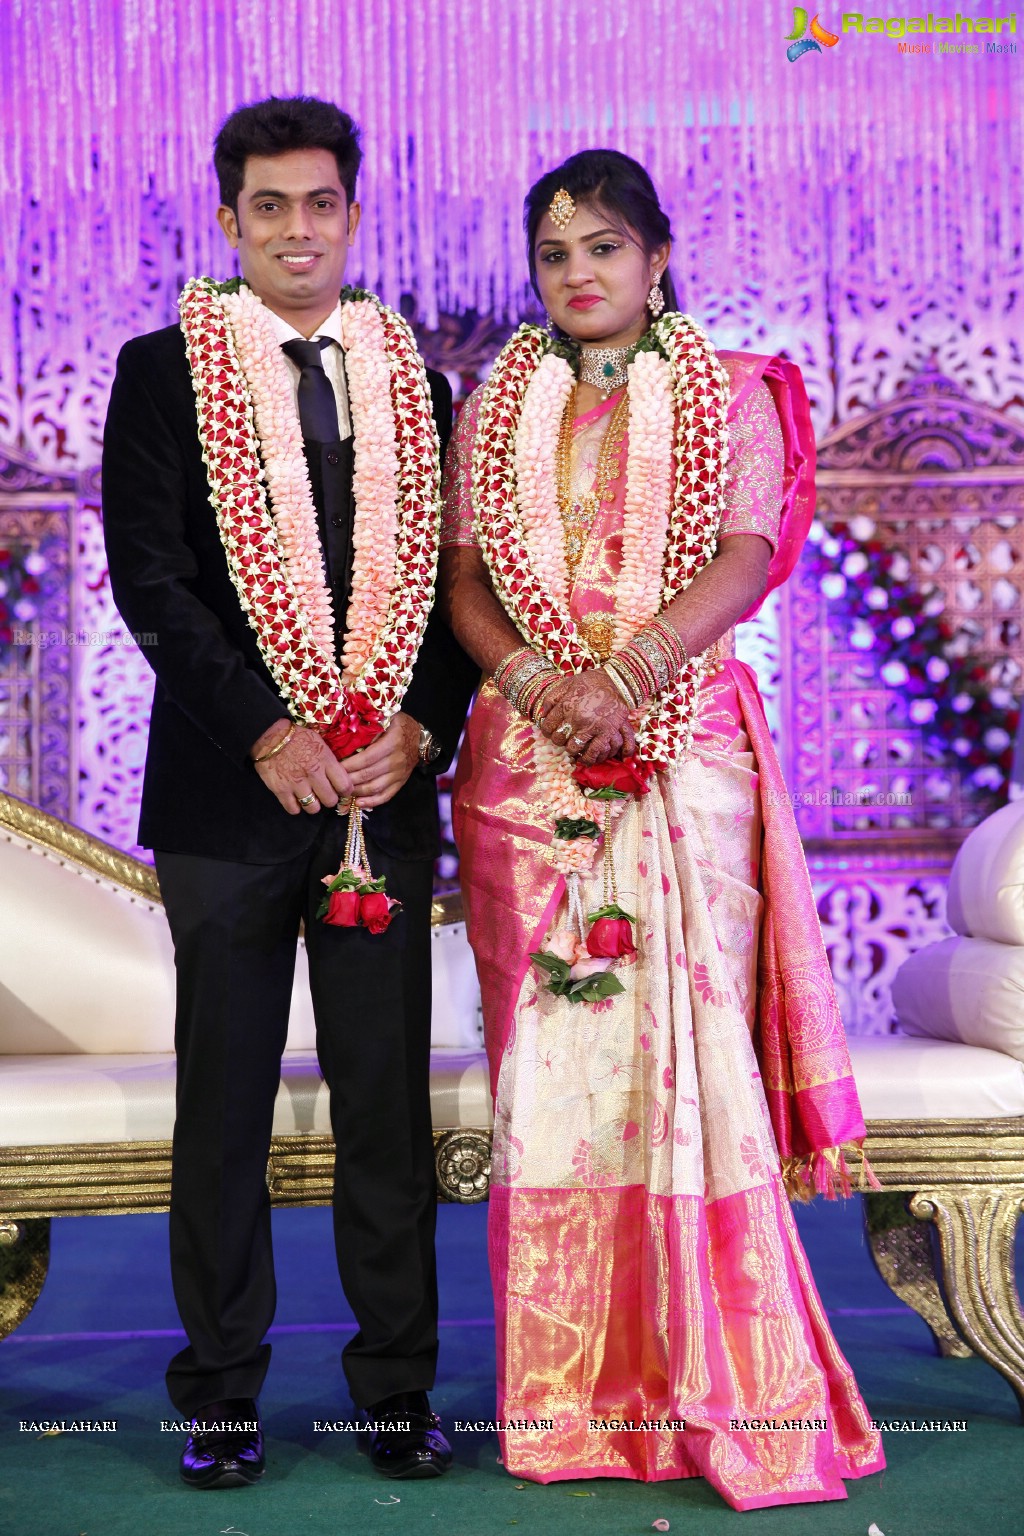 Grand Wedding Reception of Rahul with Deepika at Jalavihar, Hyderabad